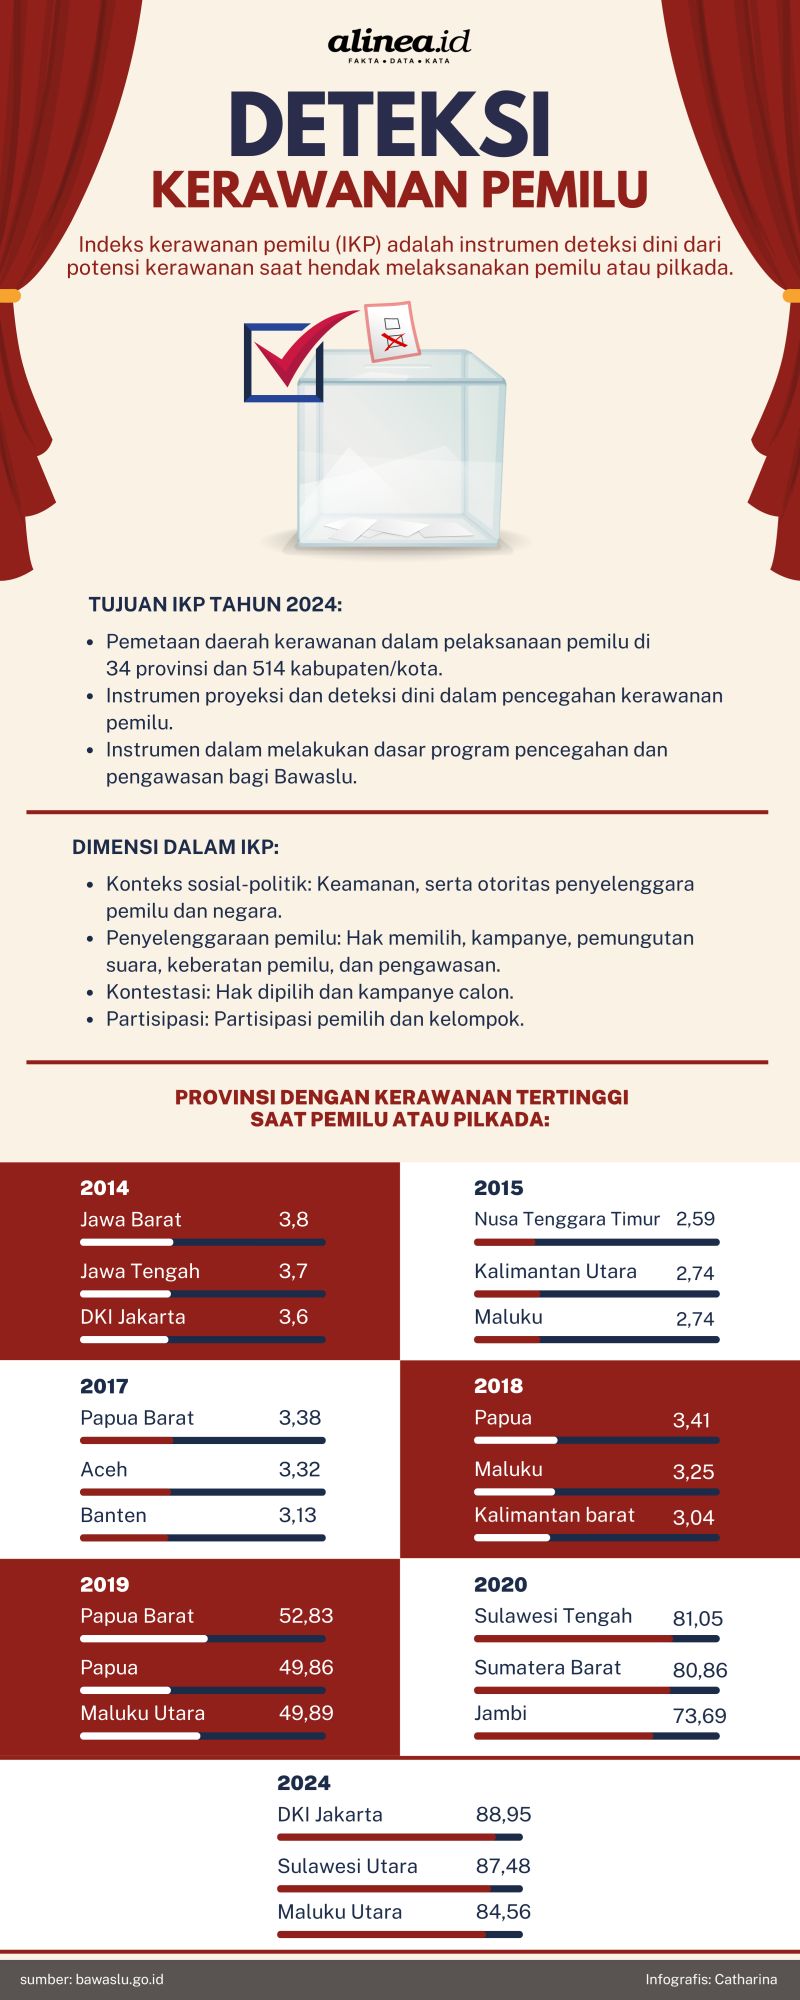 Infografik indeks kerawanan pemilu. Alinea.id/Catharina